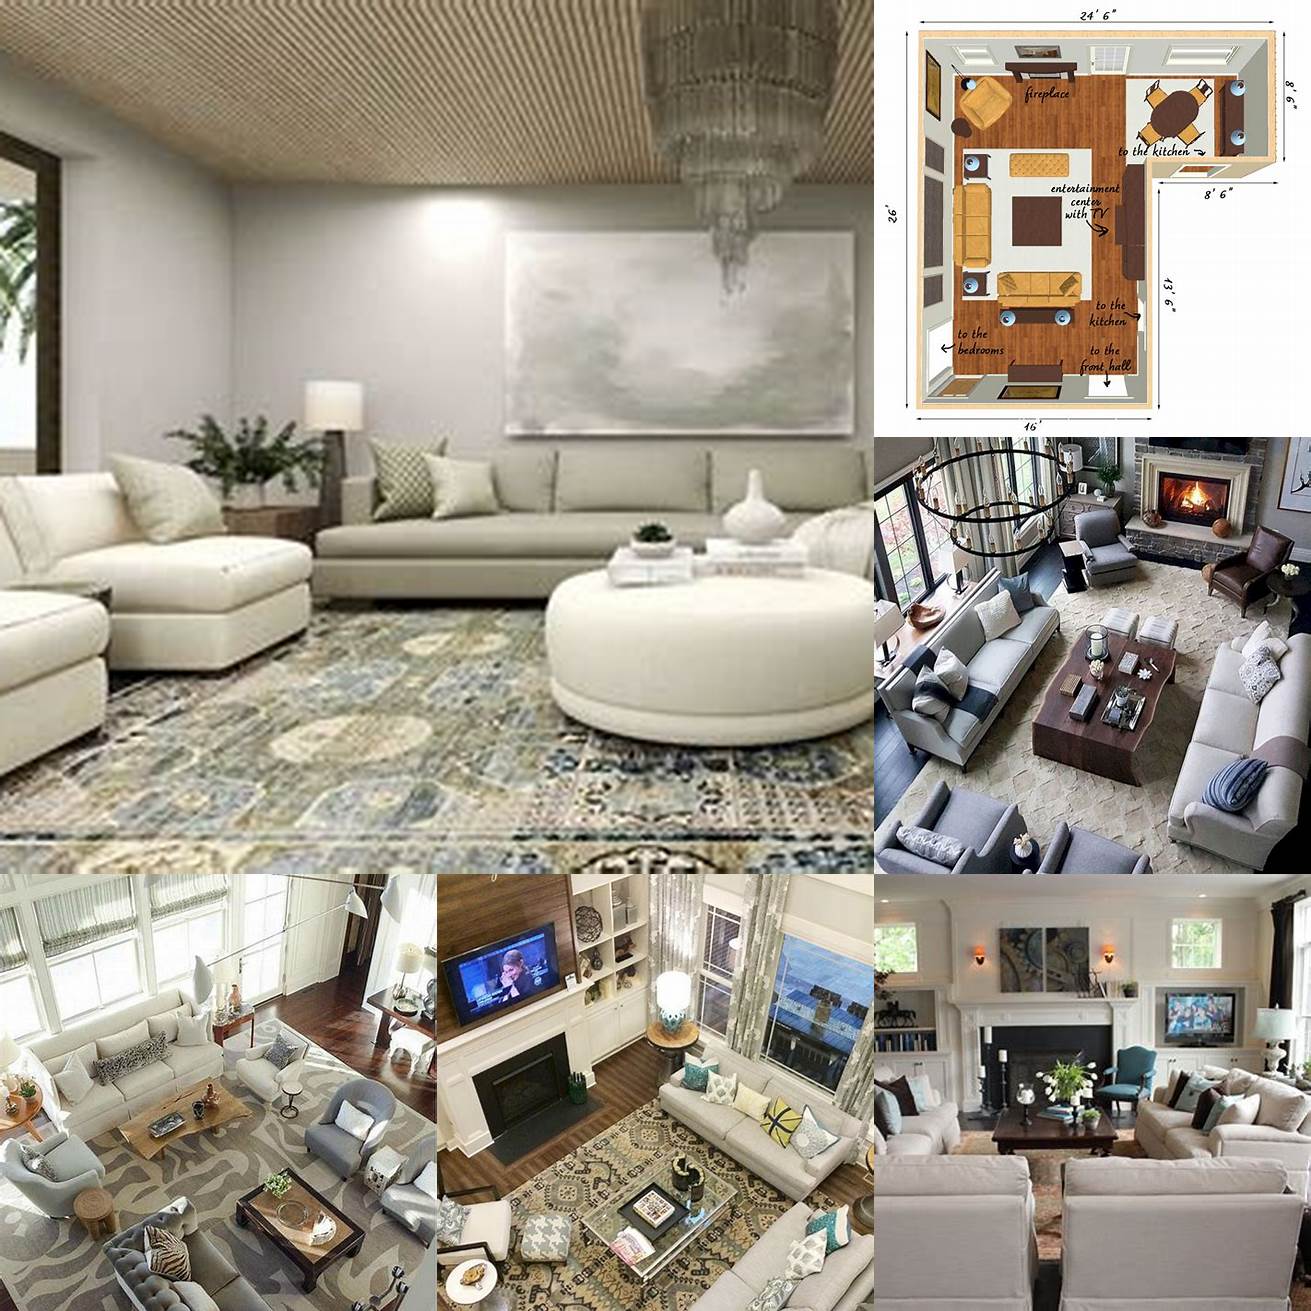 Image httpscdnhome-designingcomwp-contentuploads201611large-living-room-furniture-layout-1jpg